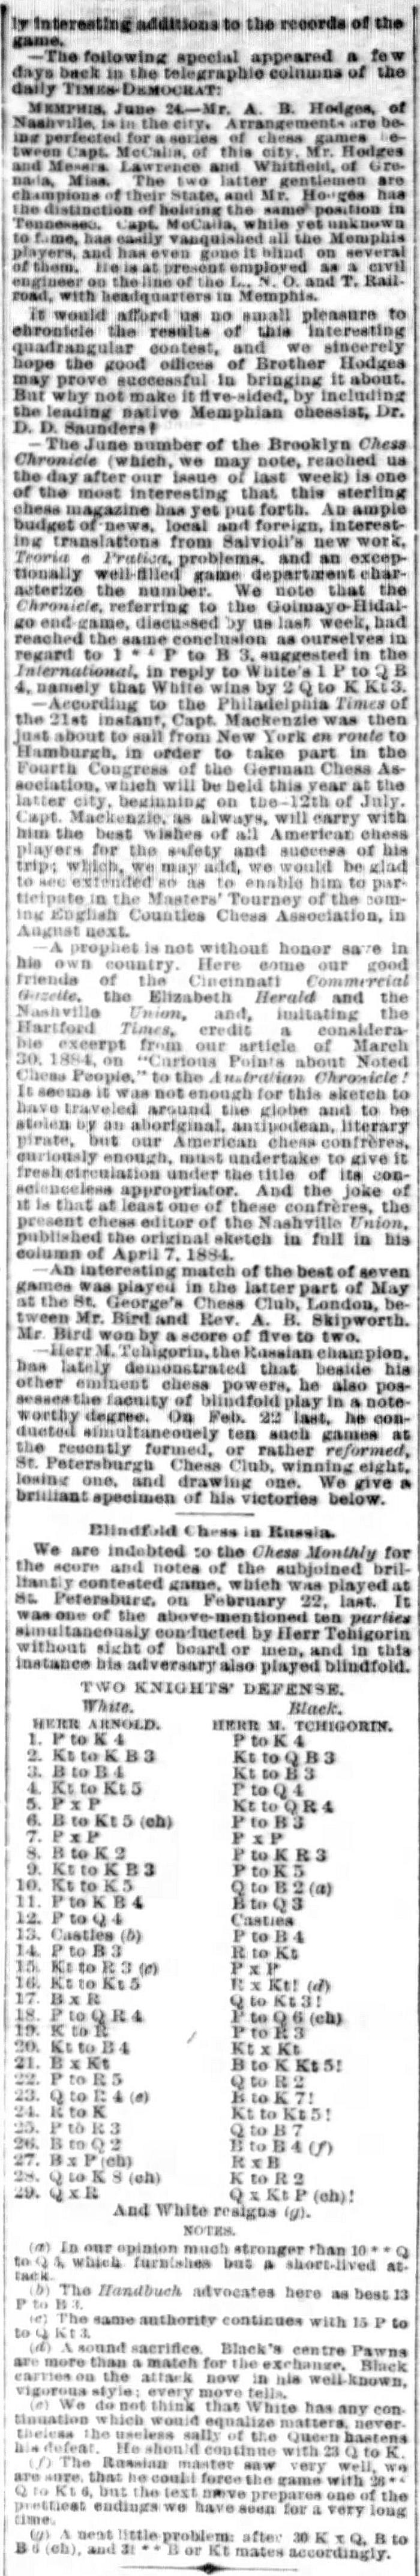 1885.06.28-02 New Orleans Times-Democrat.jpg